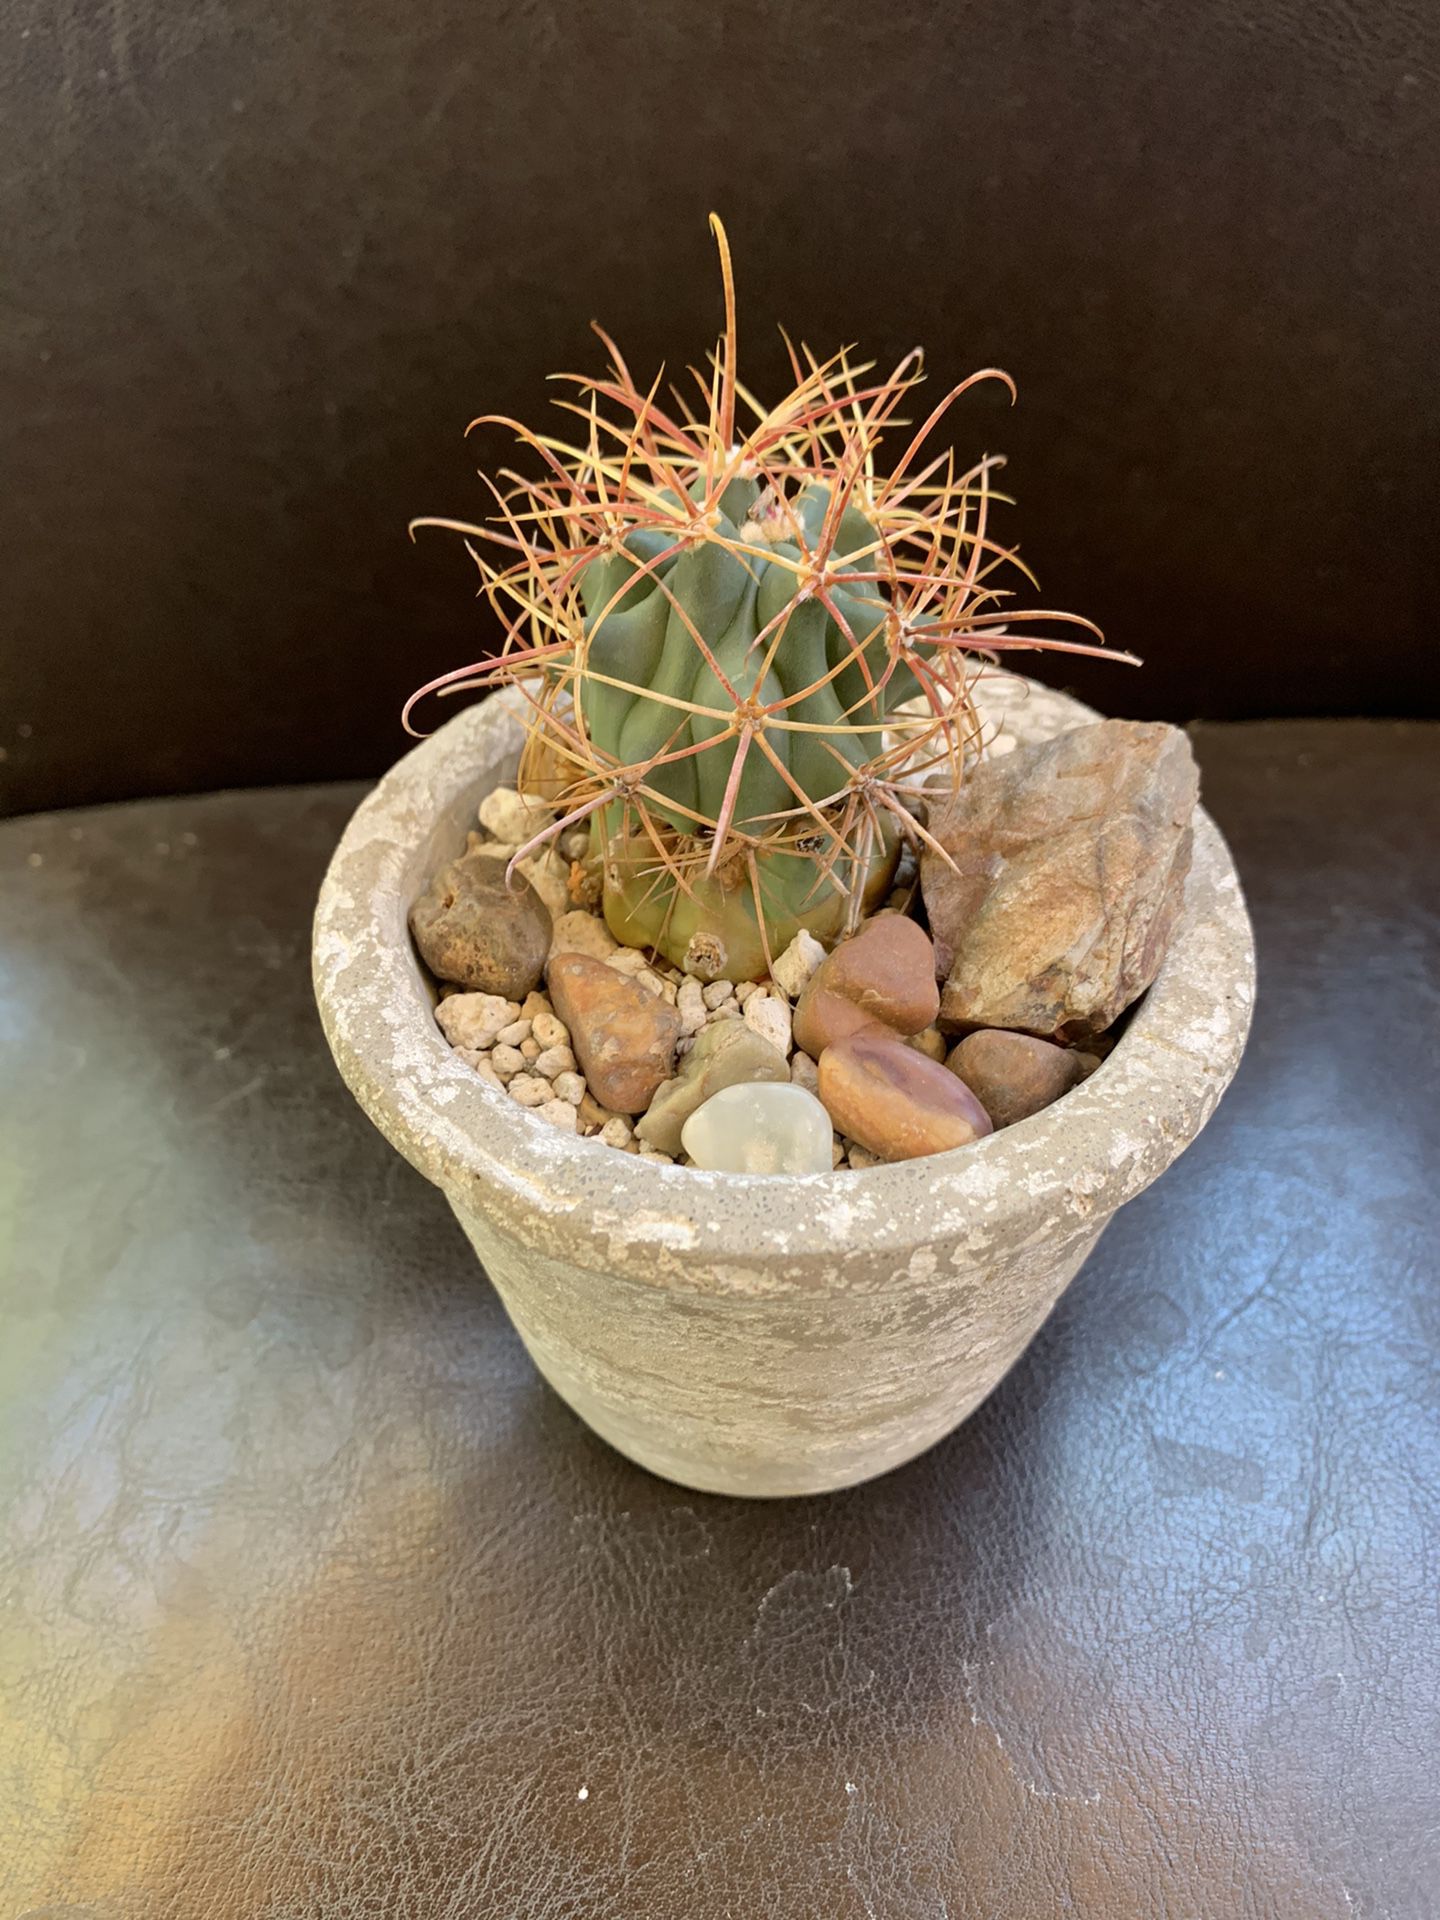 Small barrel cactus in nice pot.